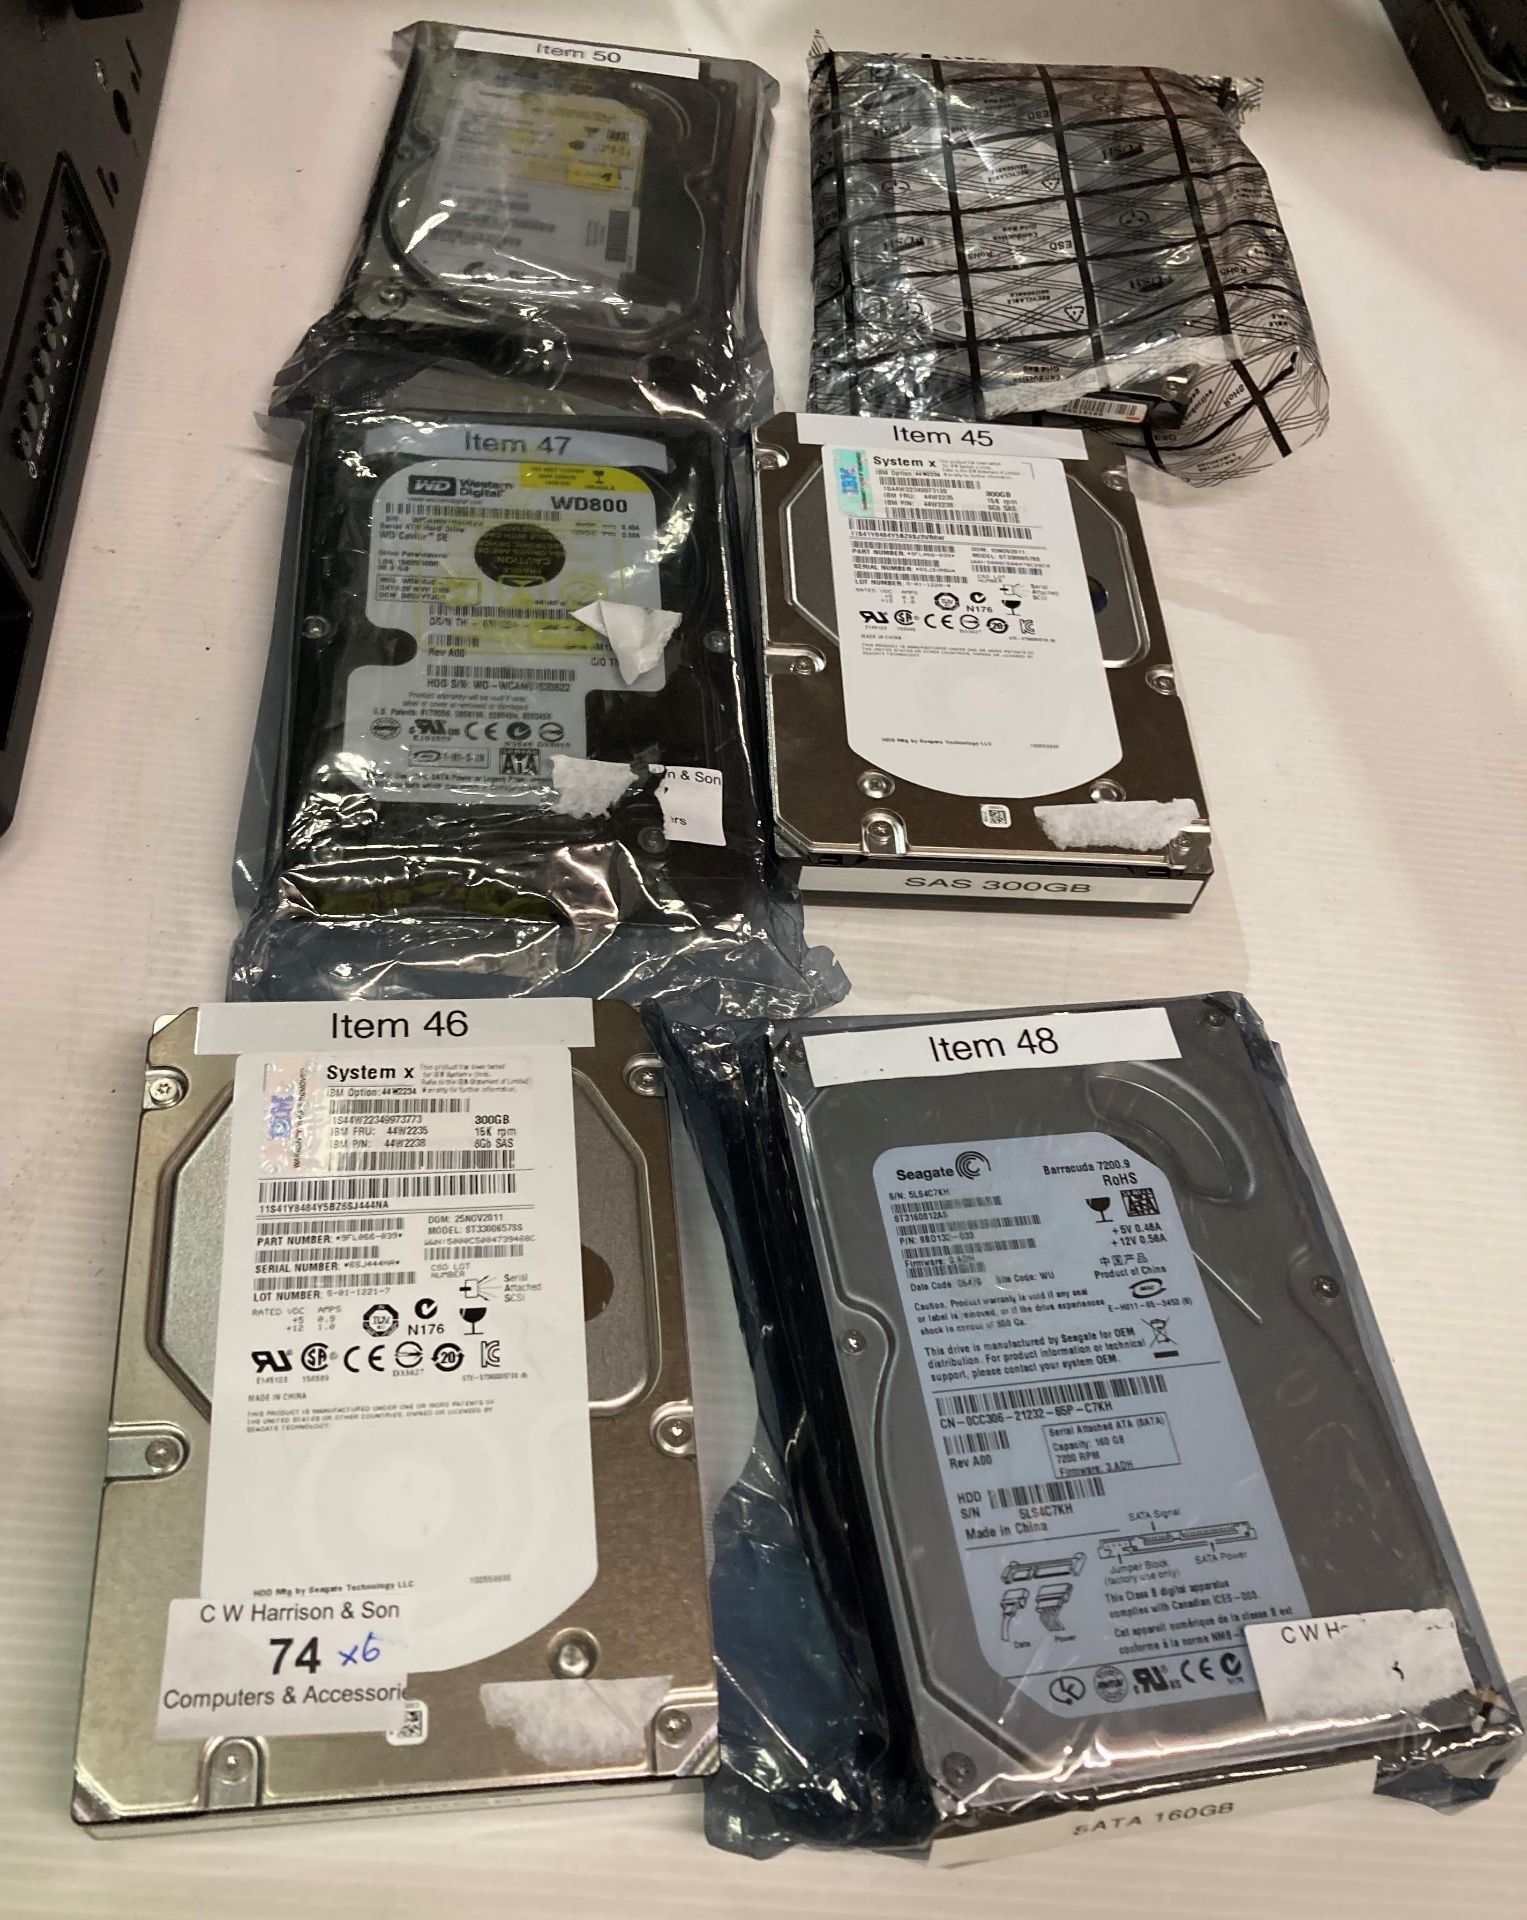 3 x IBM 300GB Hard Drives, 3 x Seagate 160GB Hard Drives and a Western 80GB hard drive all are 3.